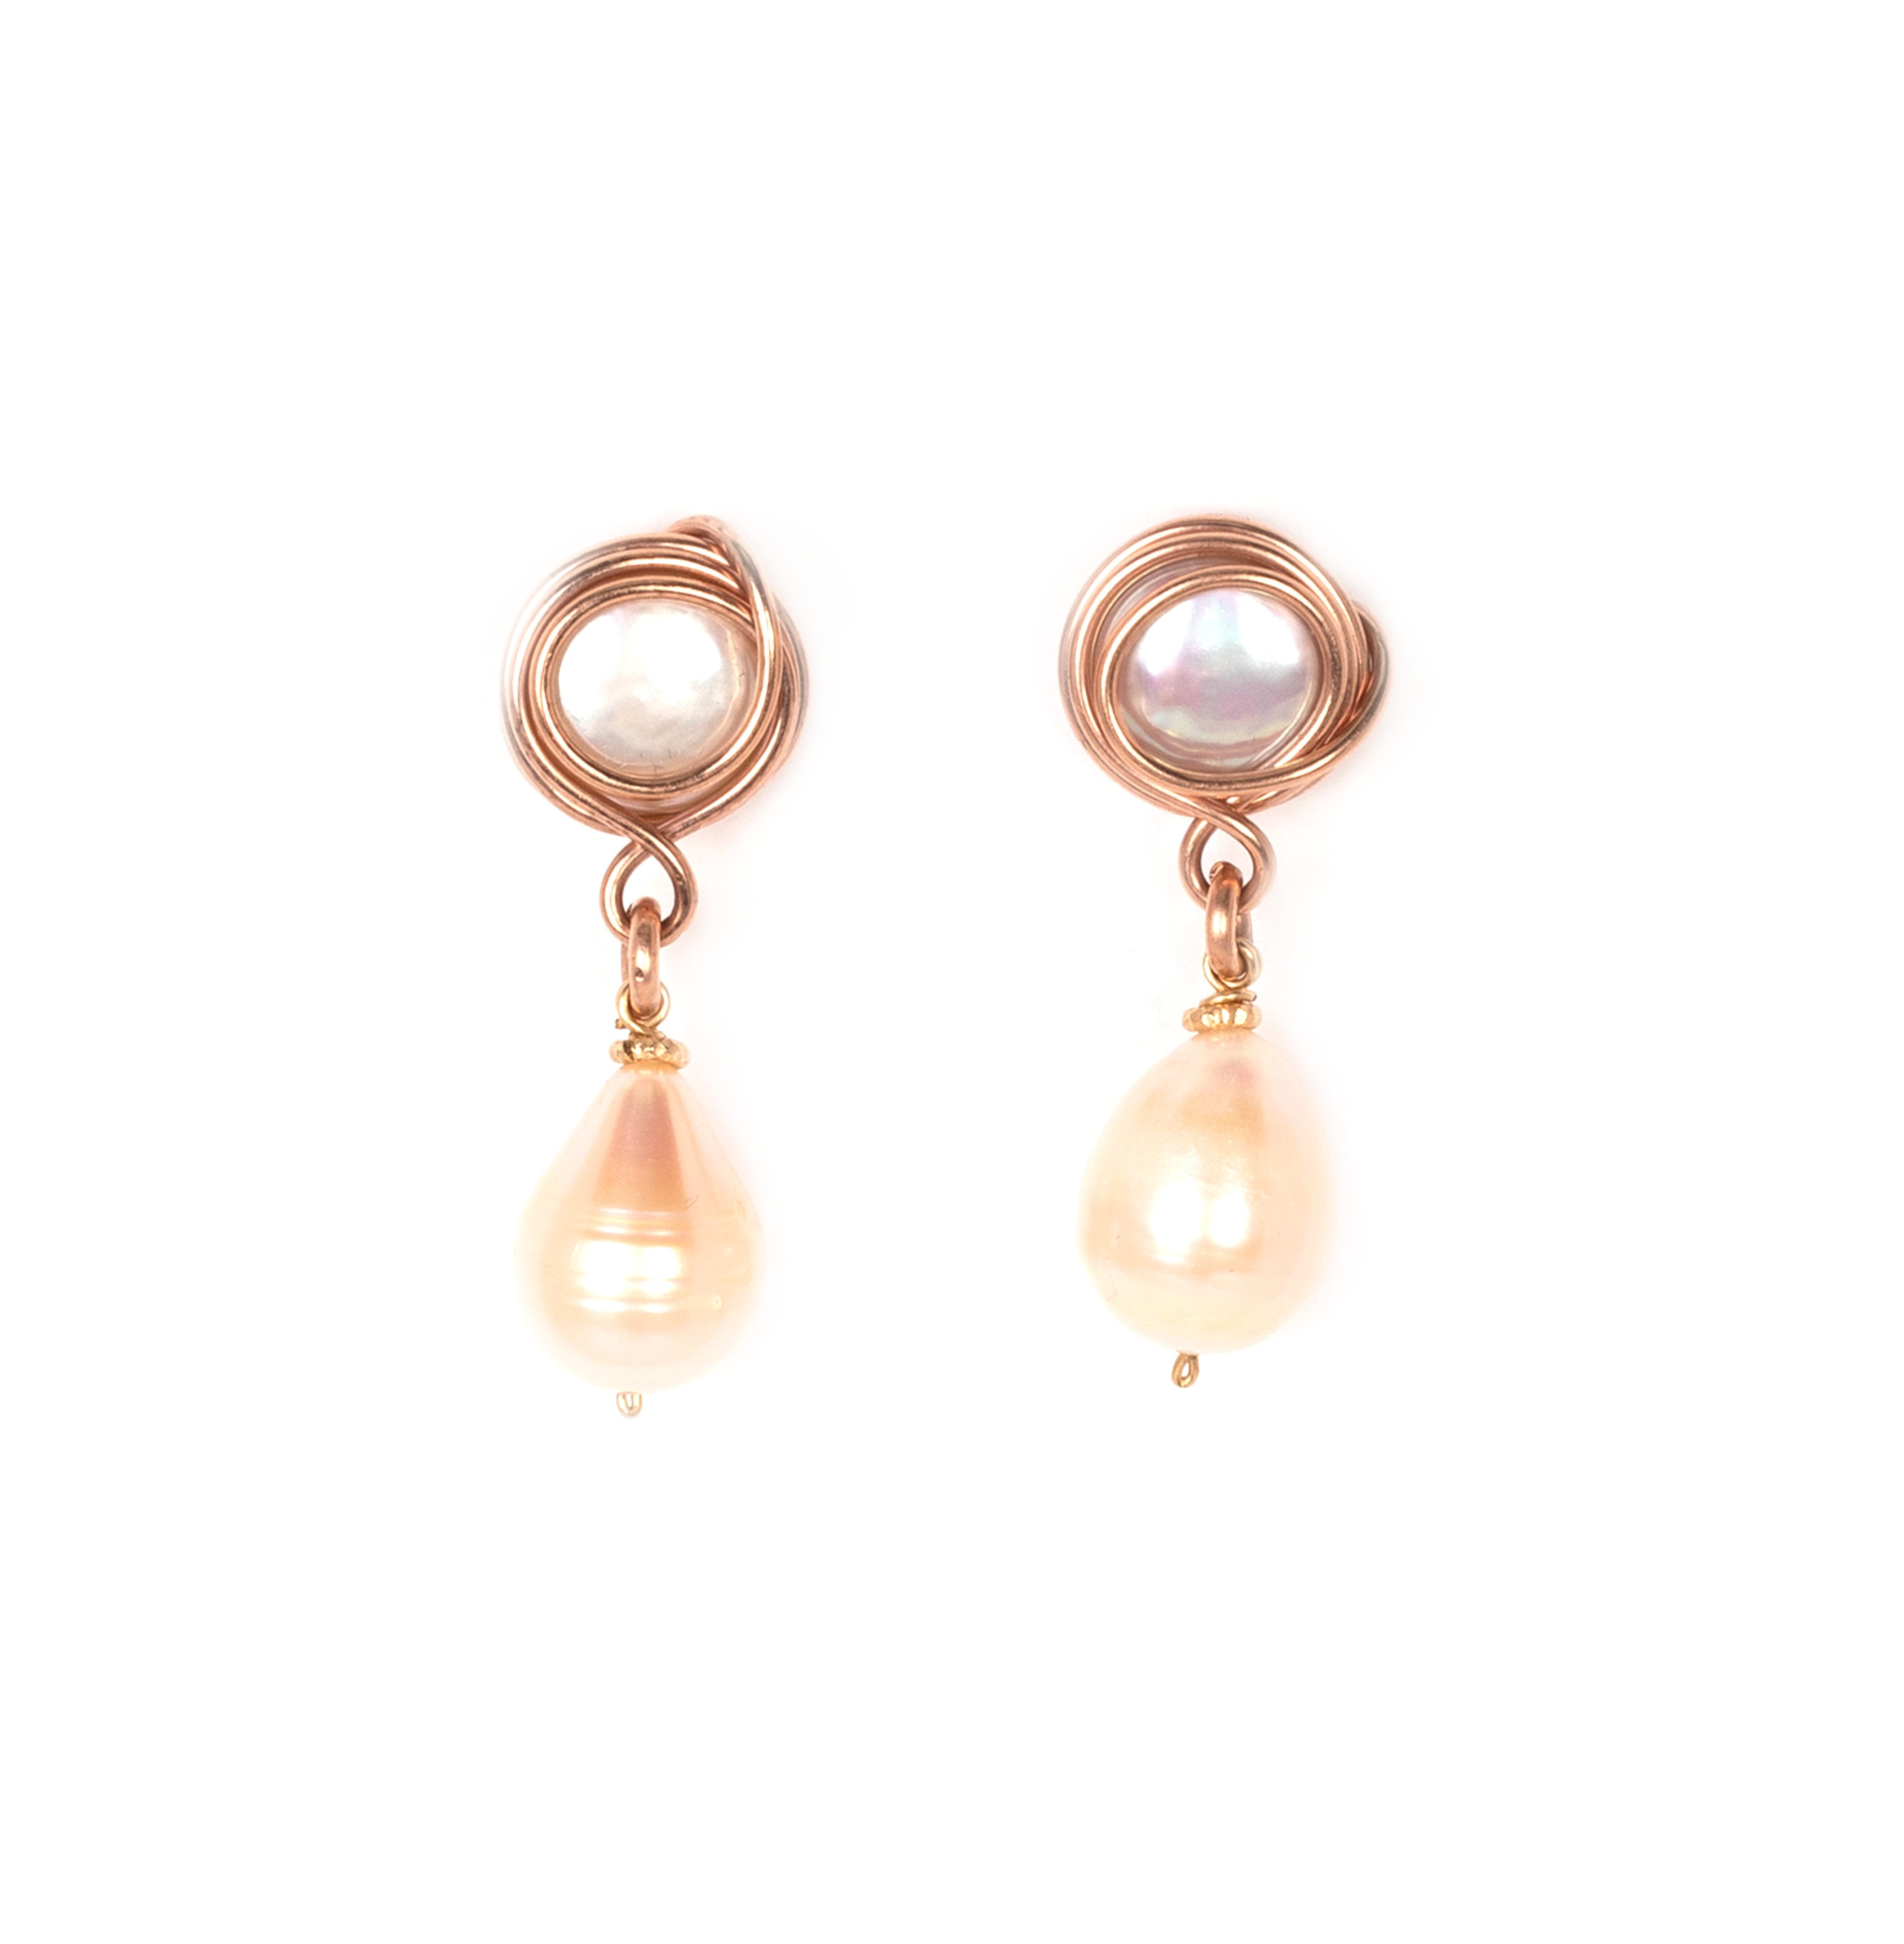 Carmencita Earrings #4 (12mm) - Salmon Pearl & Rose Gold Earrings TARBAY   